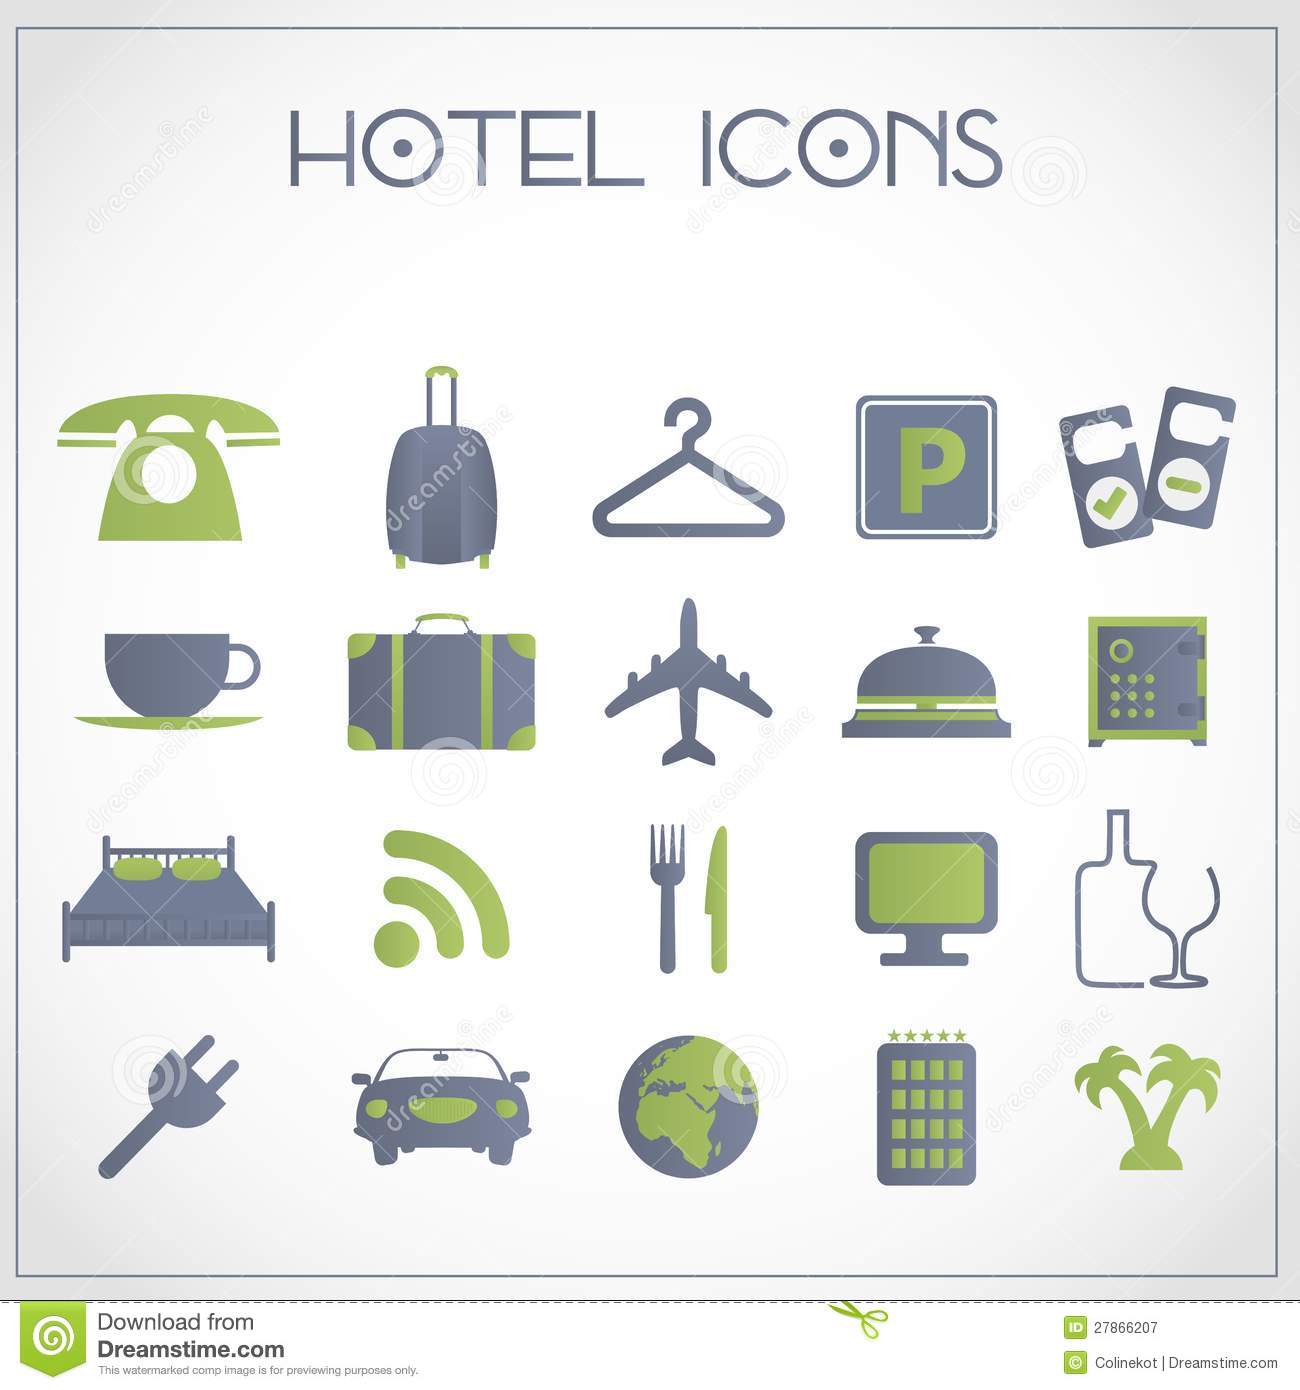 Hotel Icons Free